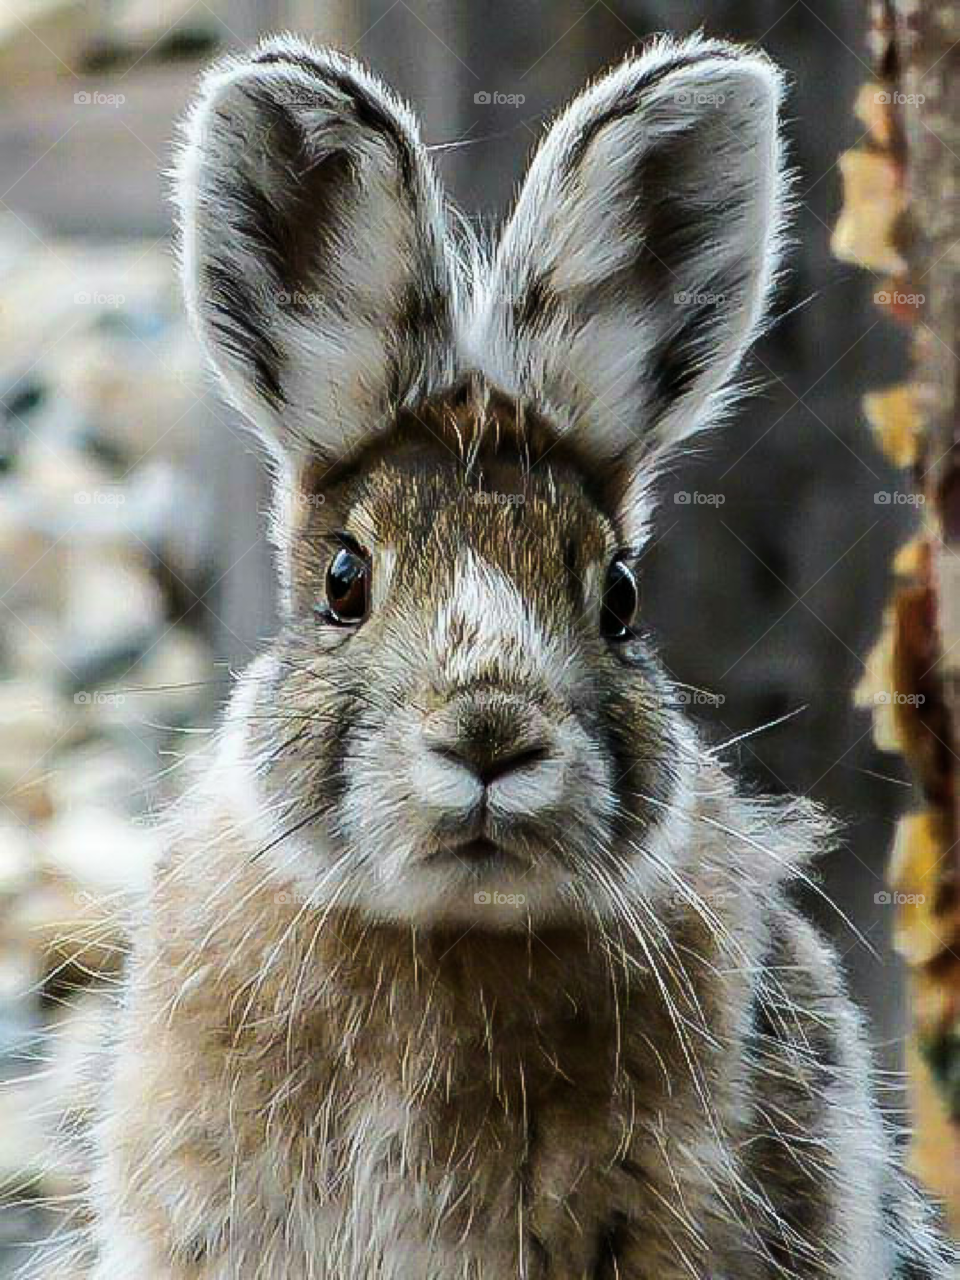 wild Jack rabbit close up